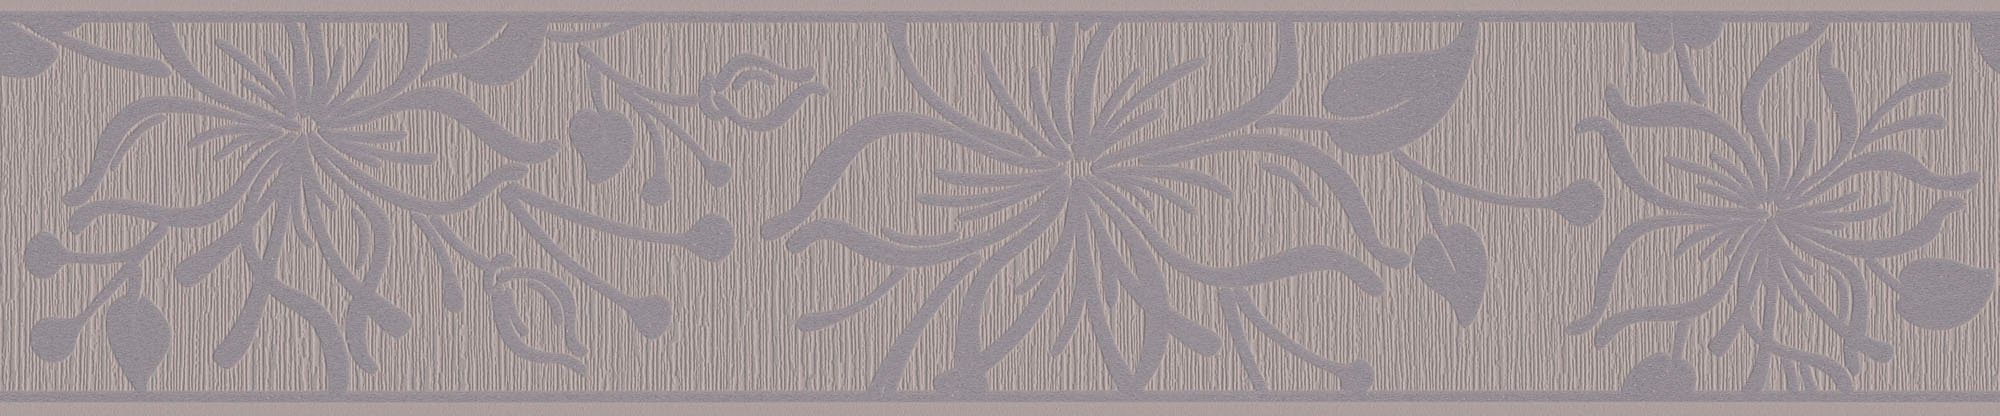 Bordüre Borders braun/grau A.S. strukturiert, Blumen Bordüre Tapete floral, natürlich, geblümt, Création 11, Only